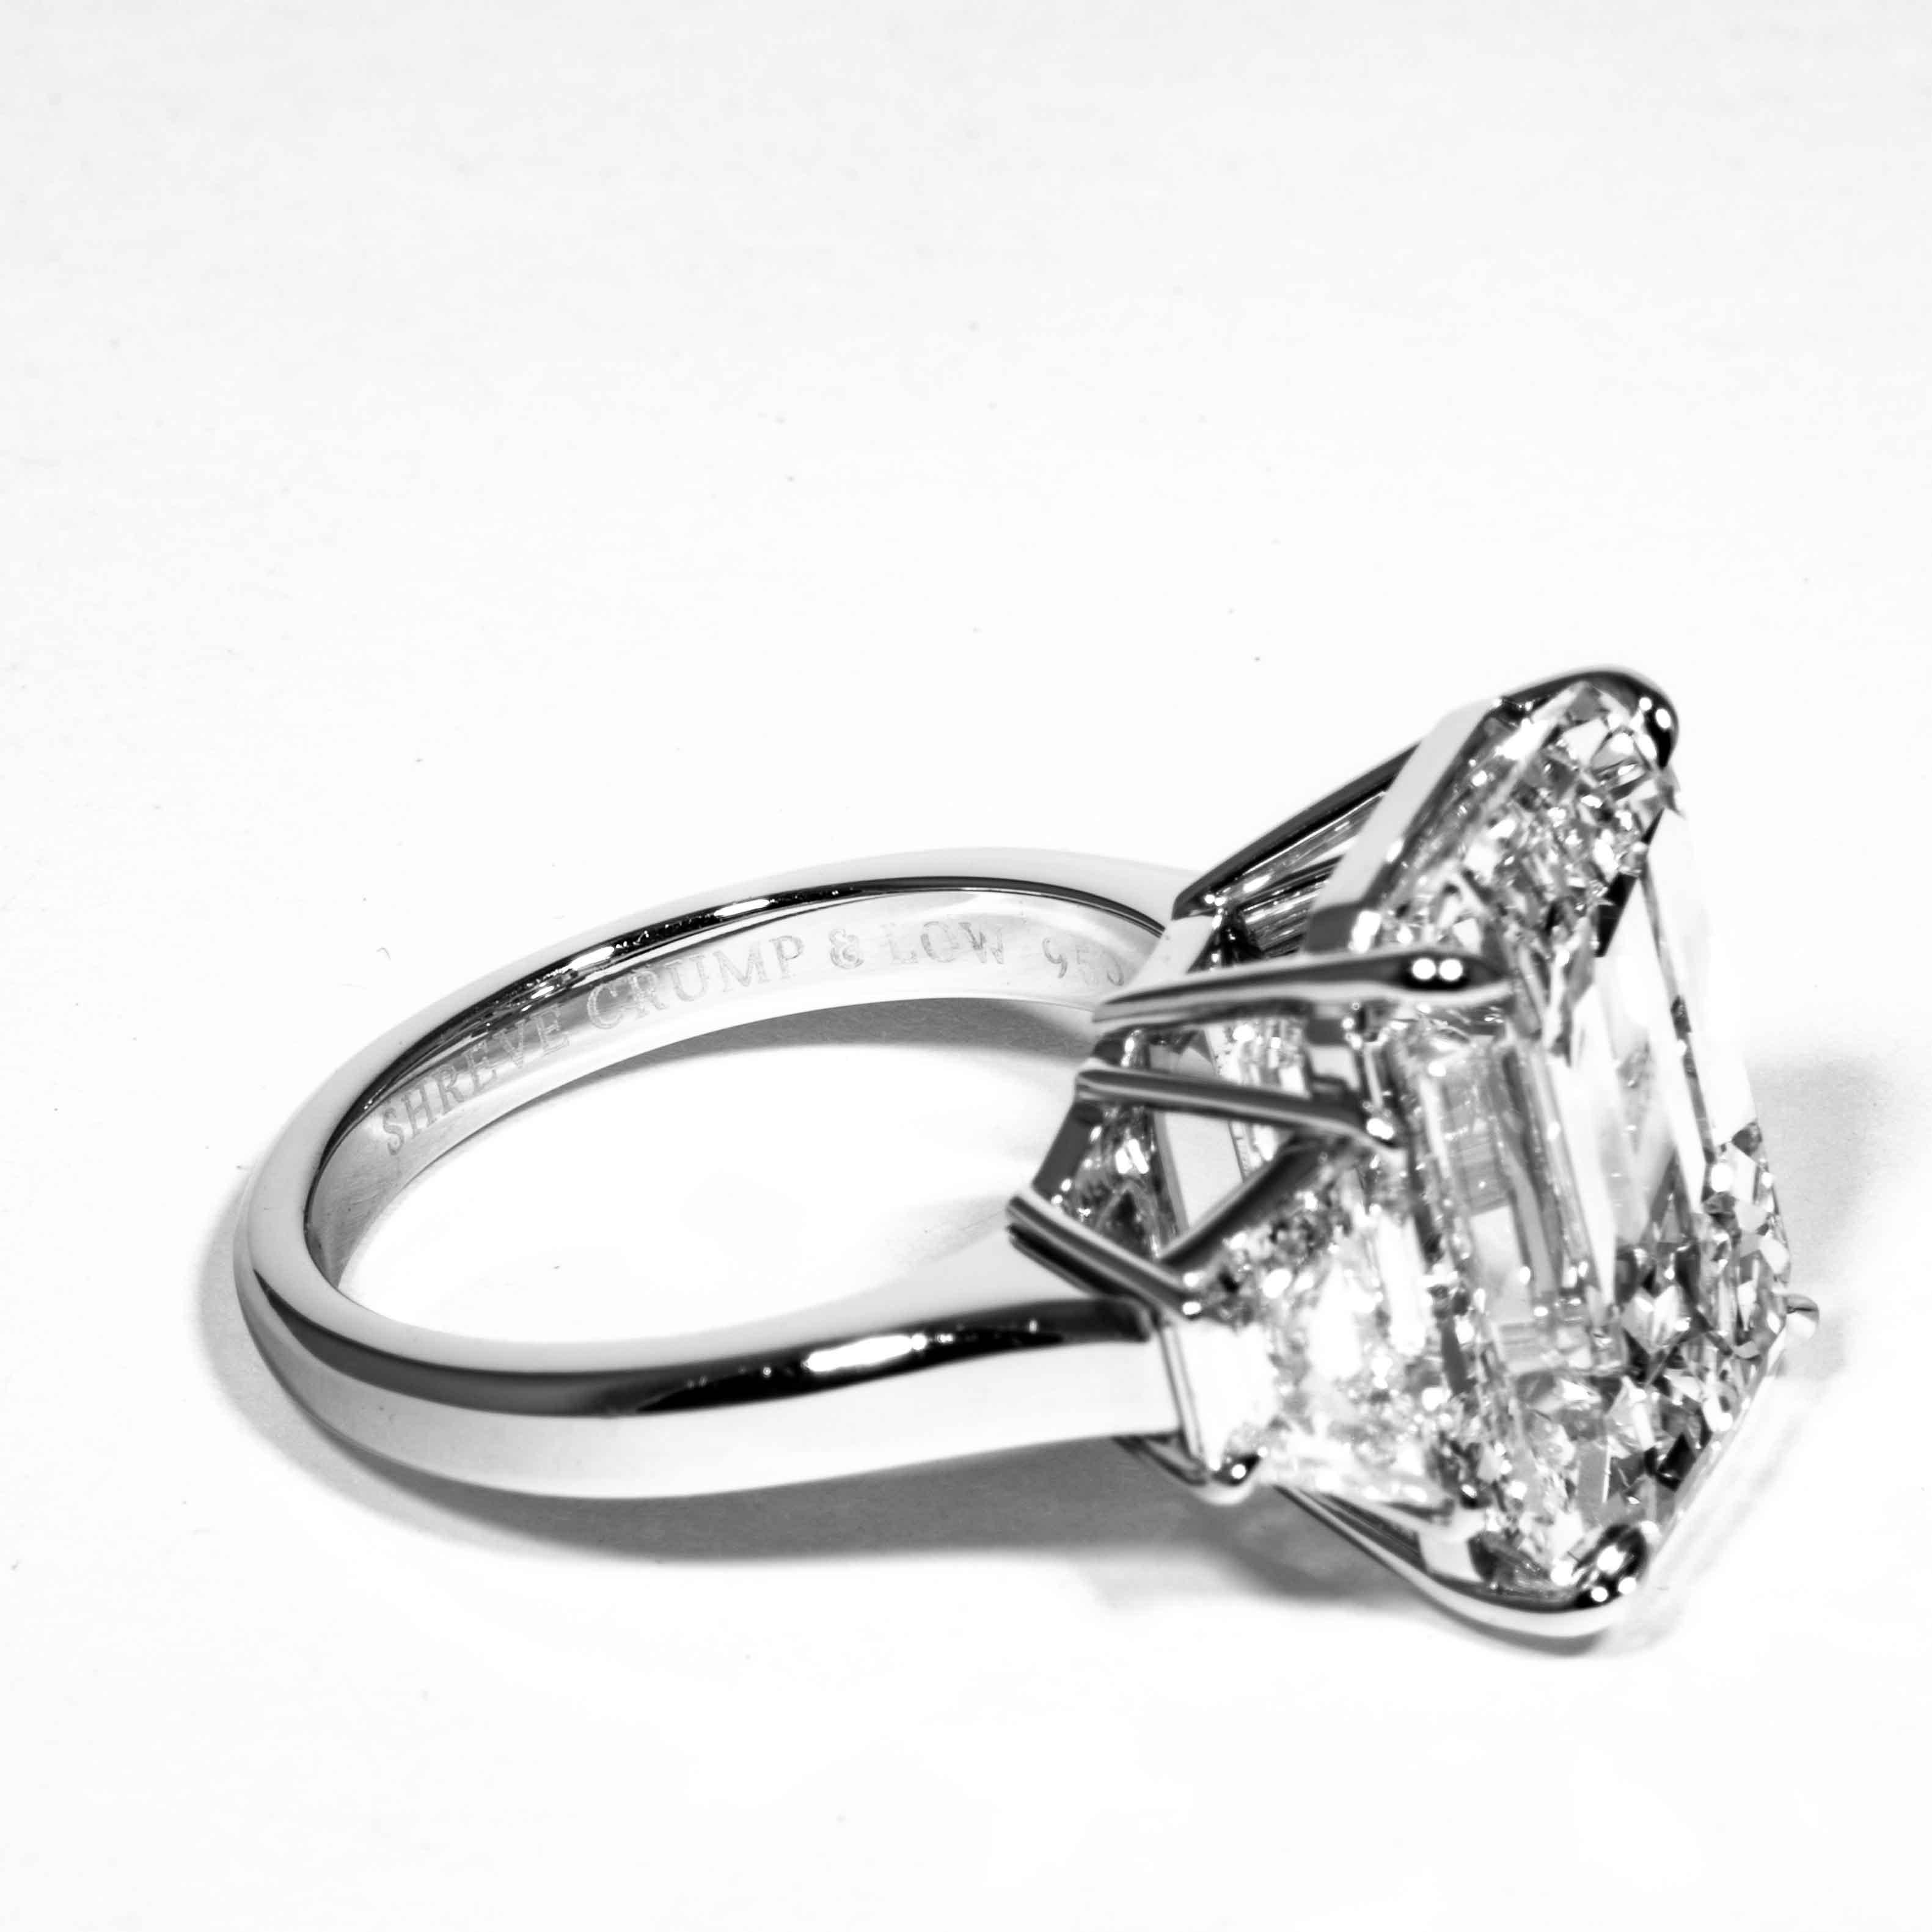 Shreve, Crump & Low GIA Certified 13.26 Carat K VS2 Emerald Cut Diamond Ring In New Condition For Sale In Boston, MA